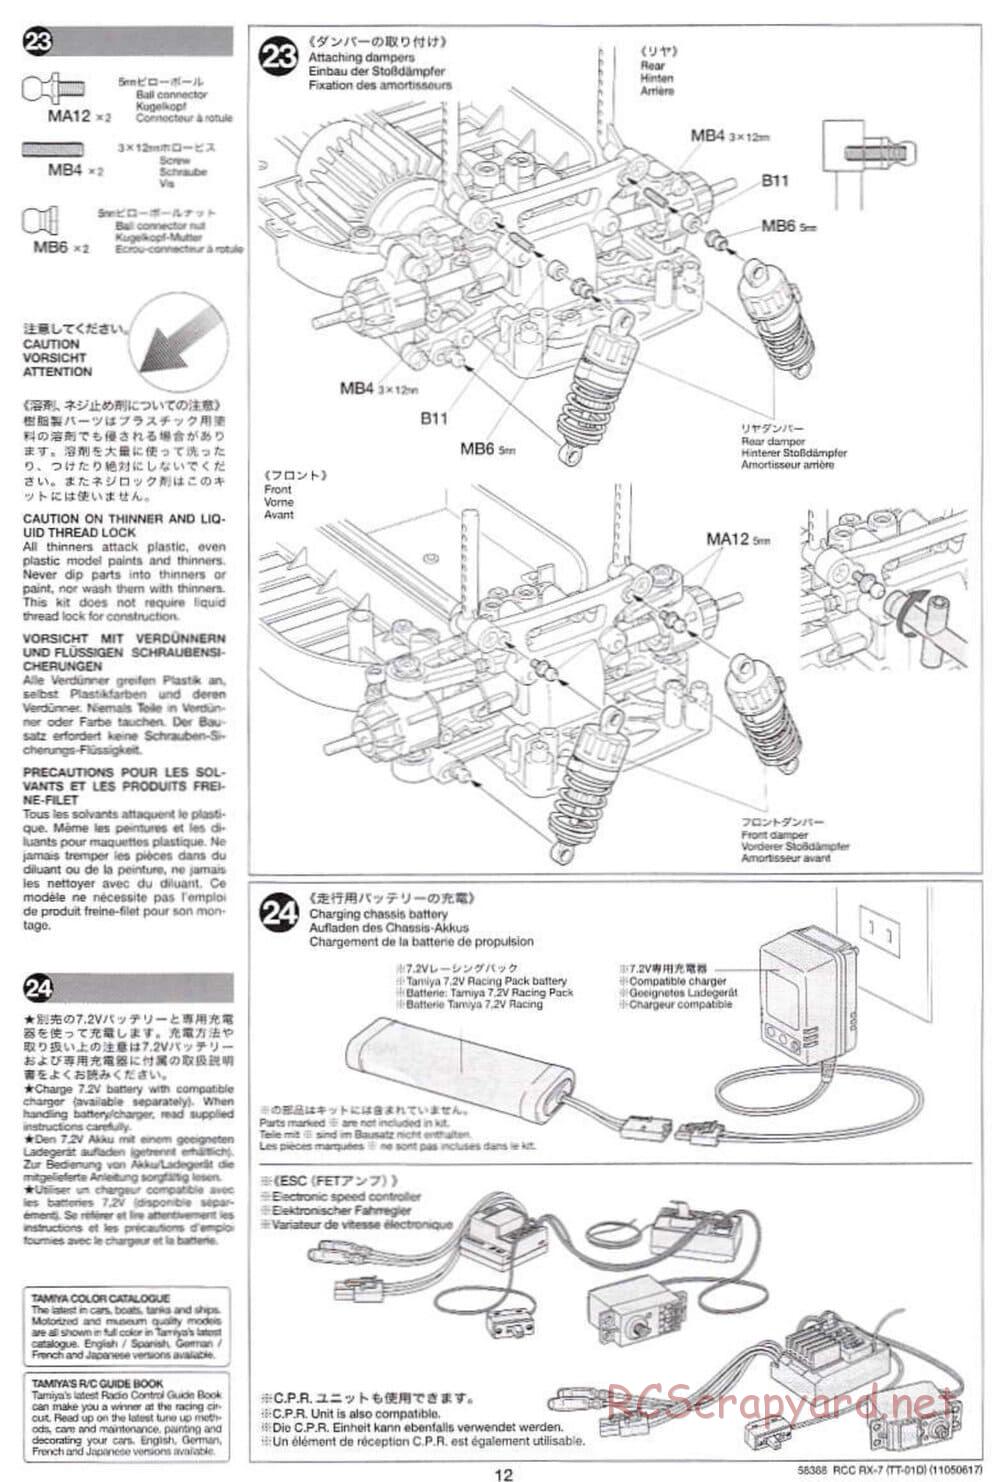 Tamiya - Mazda RX-7 - Drift Spec - TT-01D Chassis - Manual - Page 12